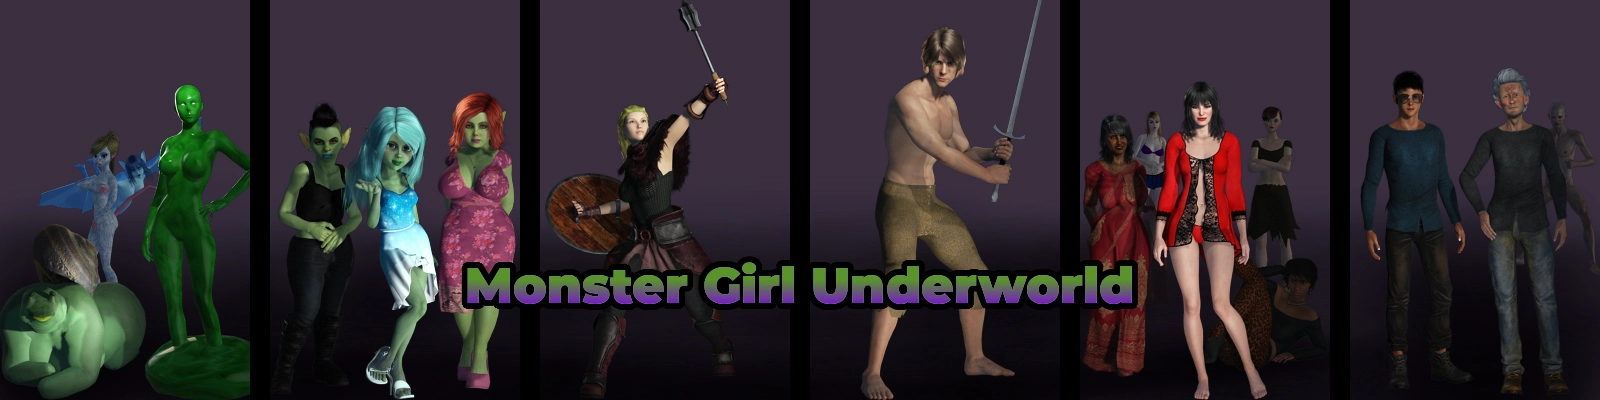 Monster Girl Underworld: The Sewers of Shamarin [v0.2.0] main image